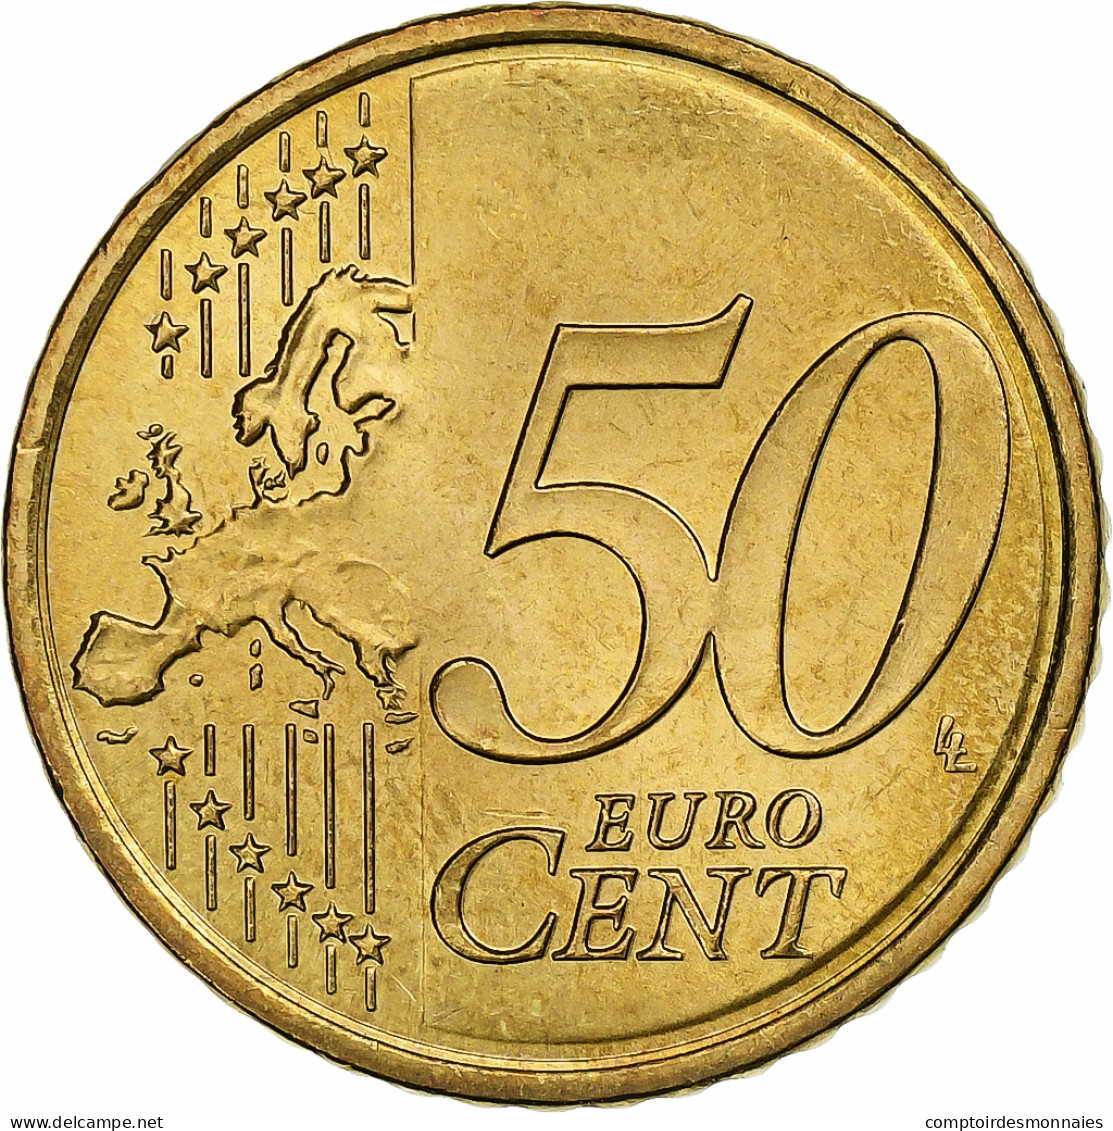 Slovaquie, 50 Euro Cent, Bratislava Castle, 2009, Golden, SUP, Or Nordique - Slovacchia